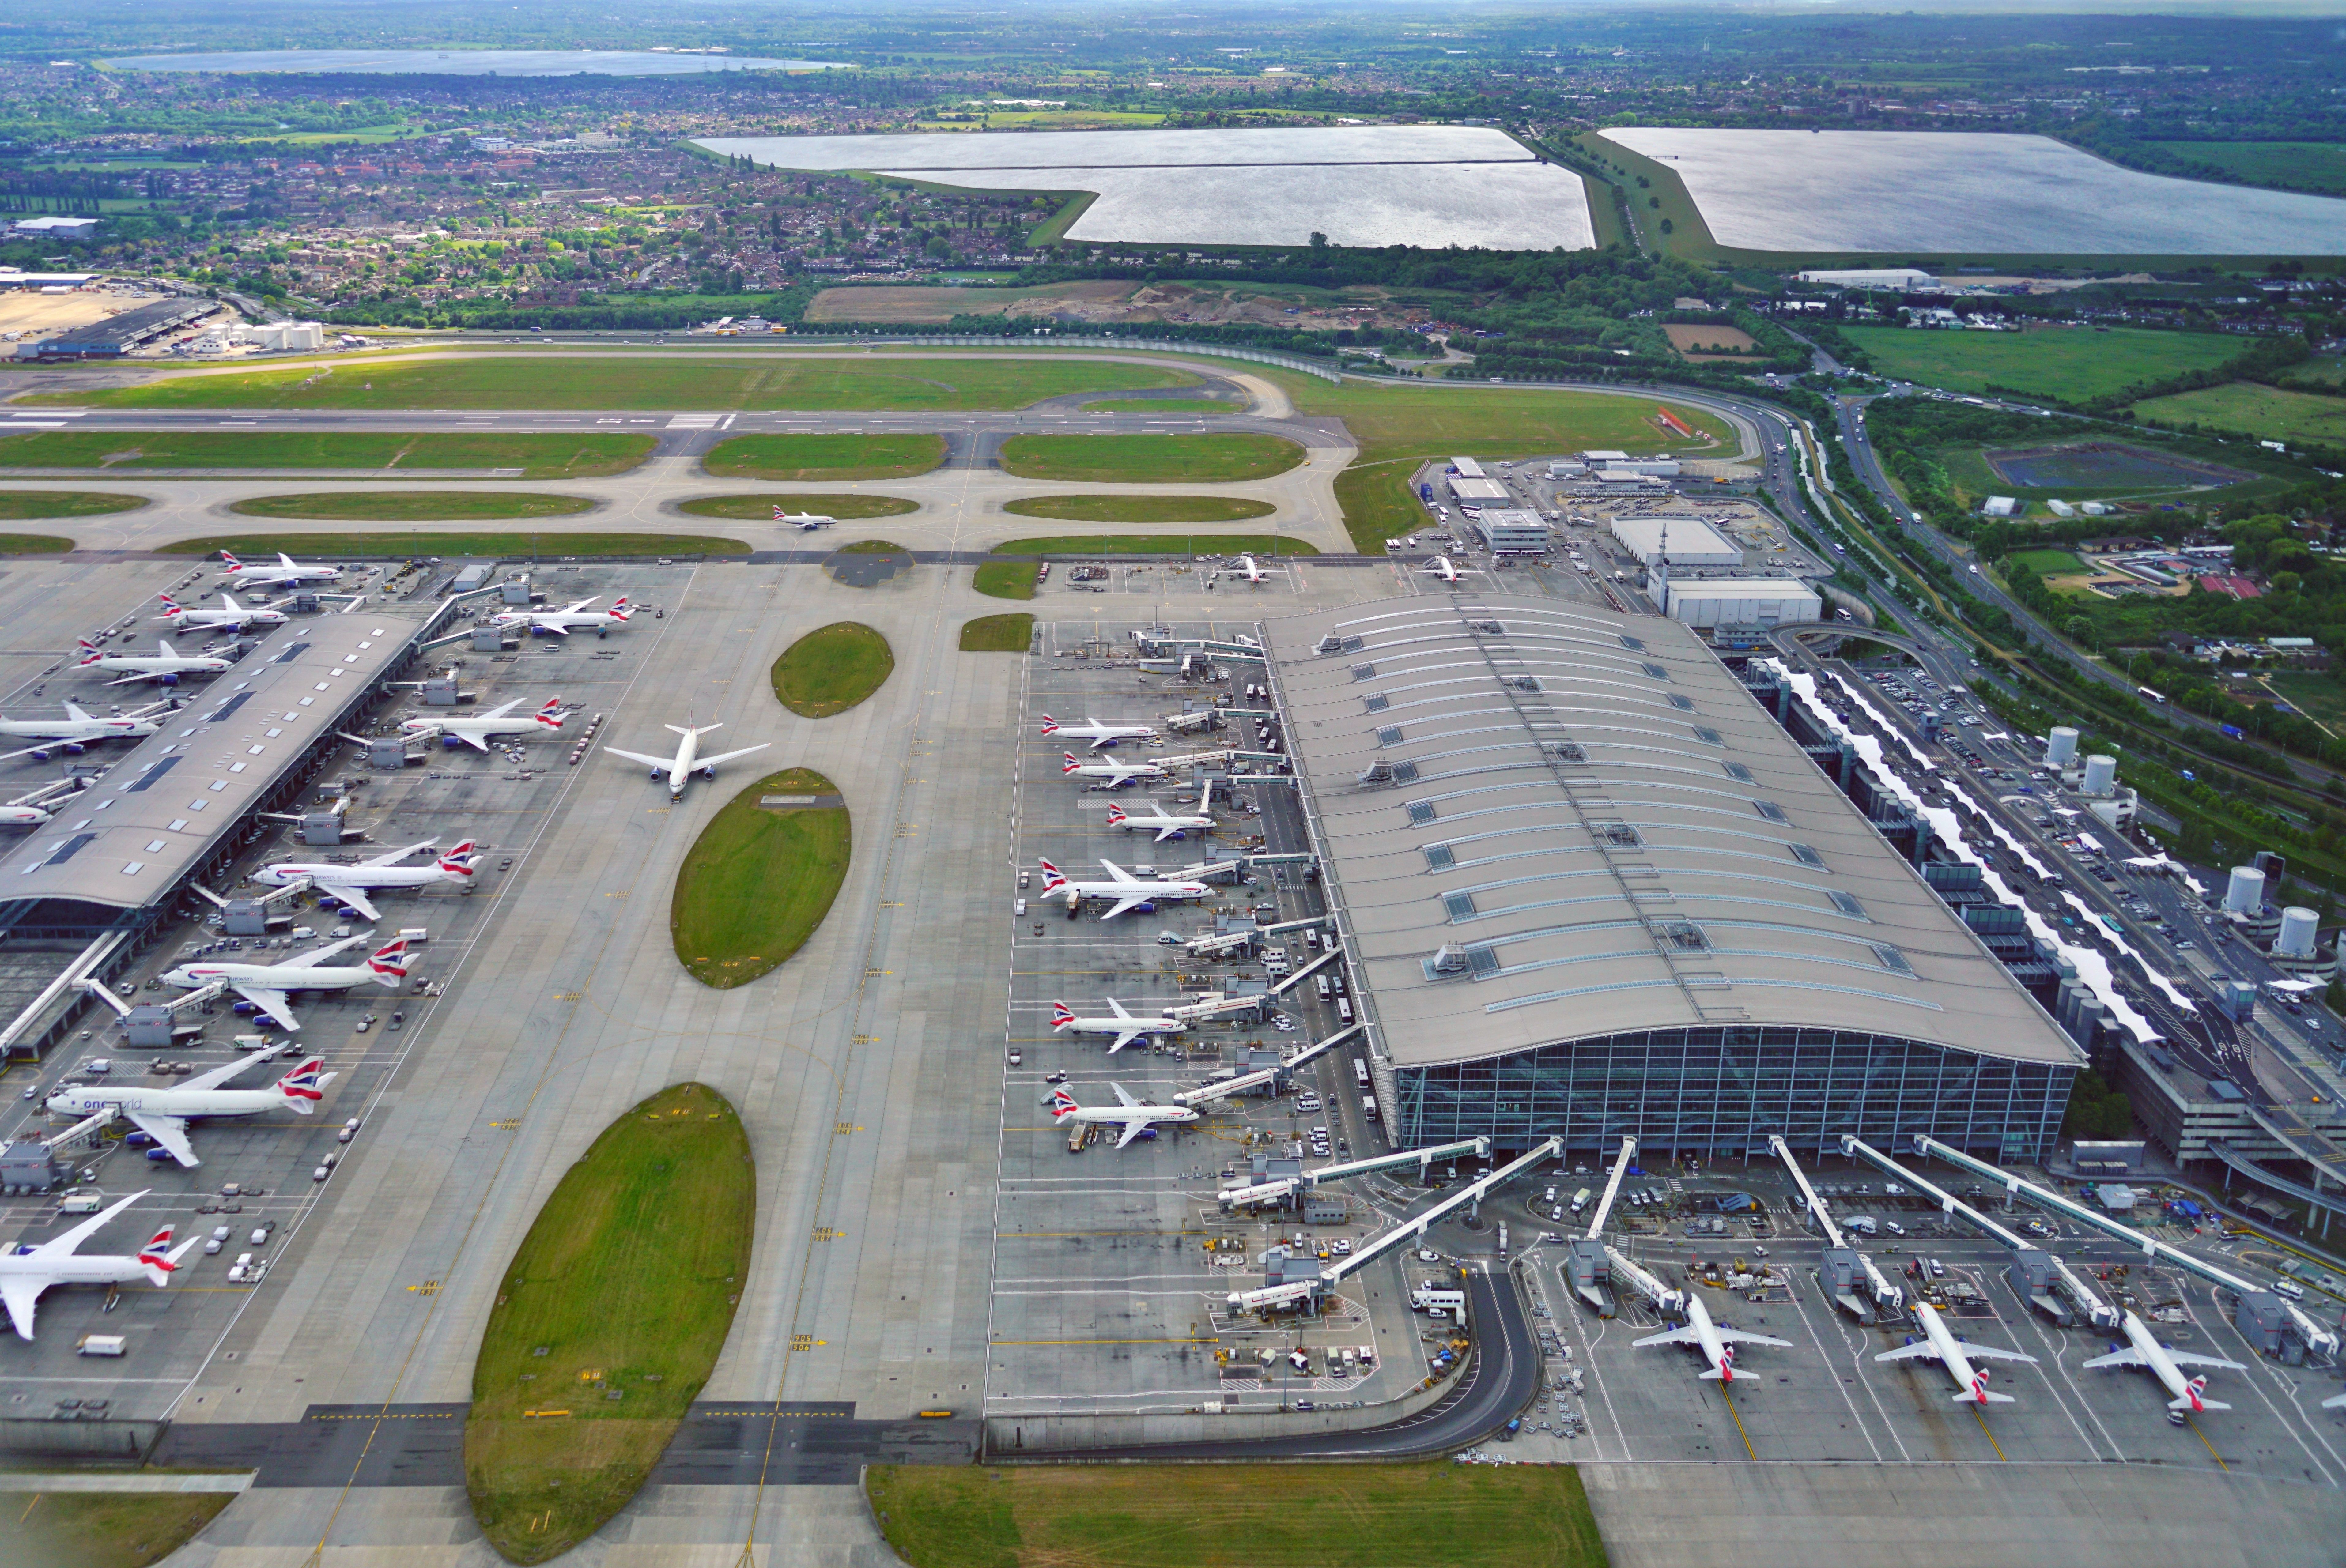 London Heathrow Airport Aerial View